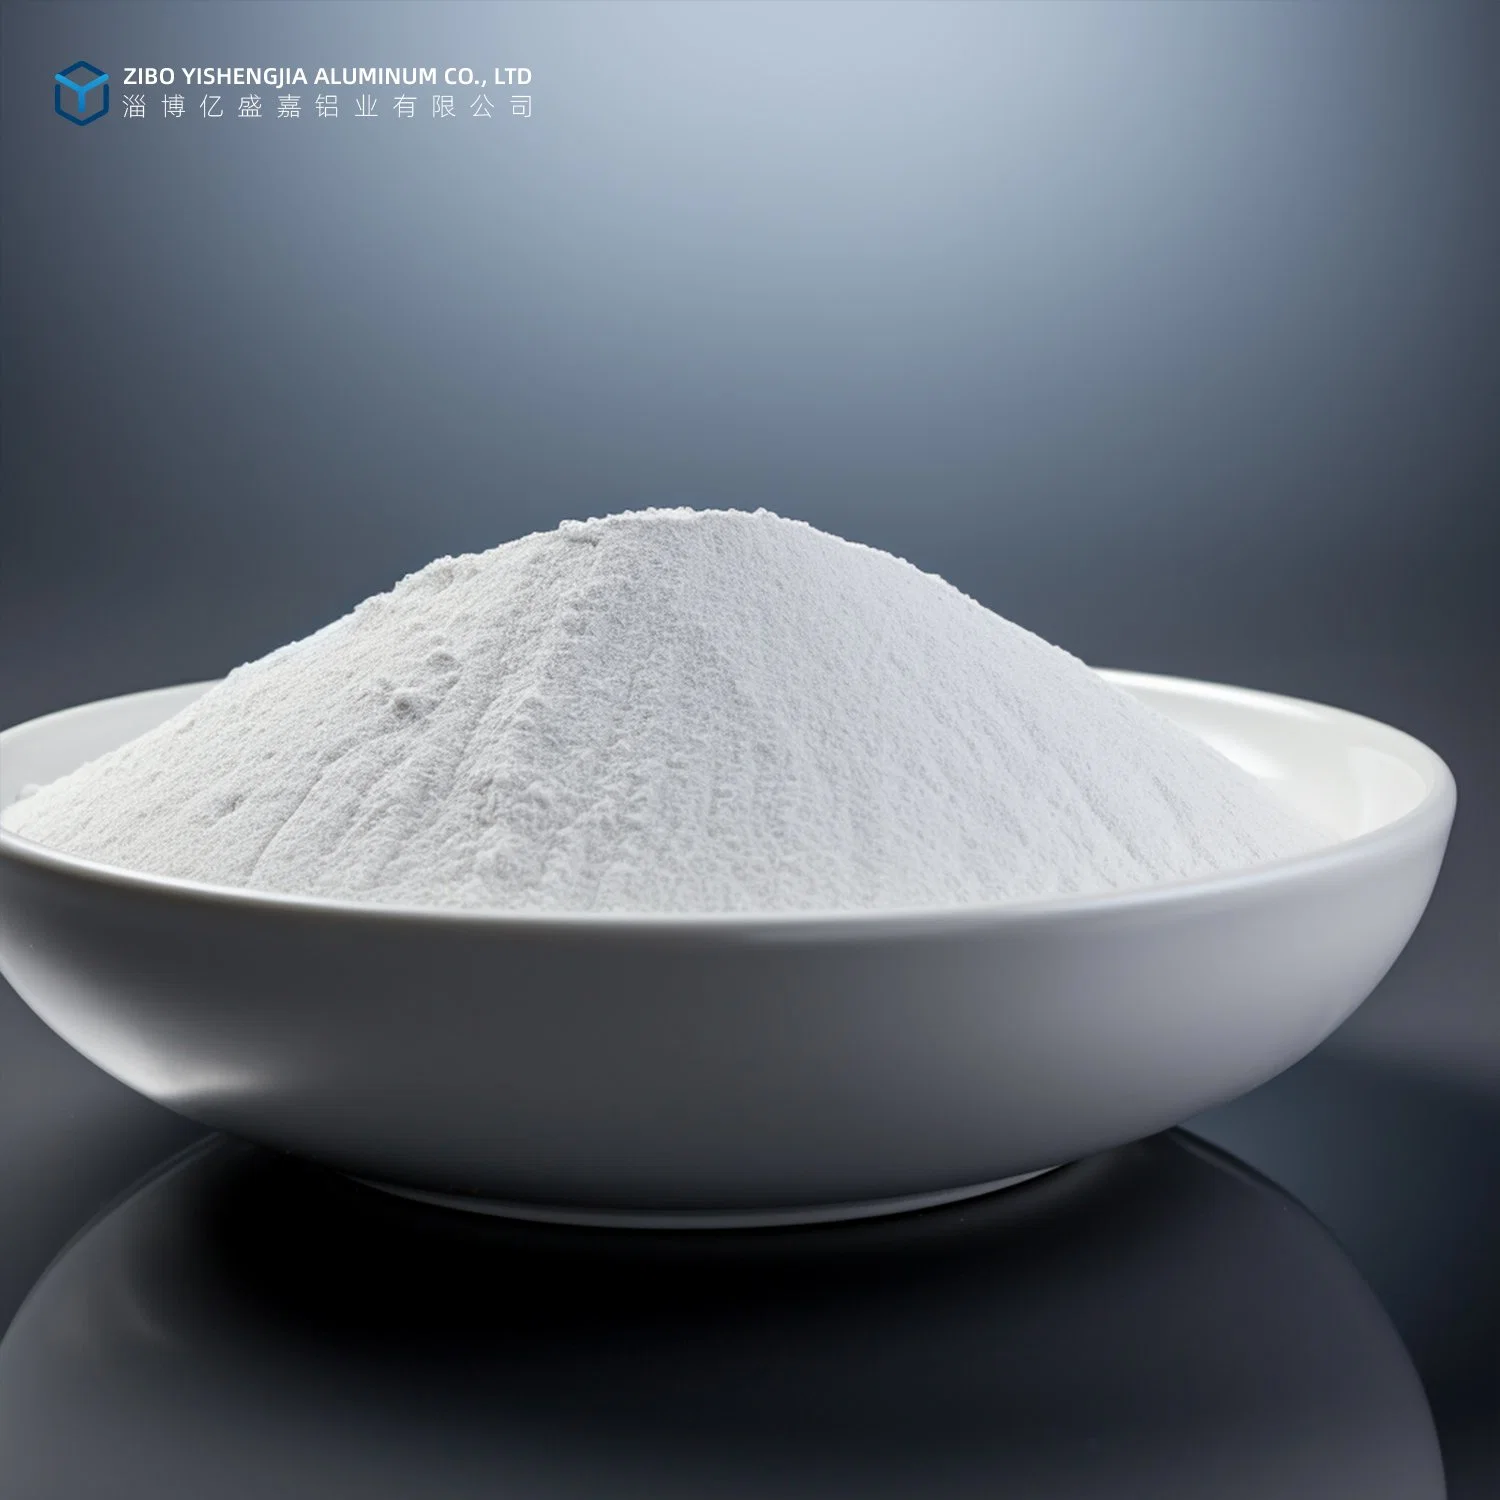 Superior Insulating Materials - 5n Nano Aluminium Oxide Powder